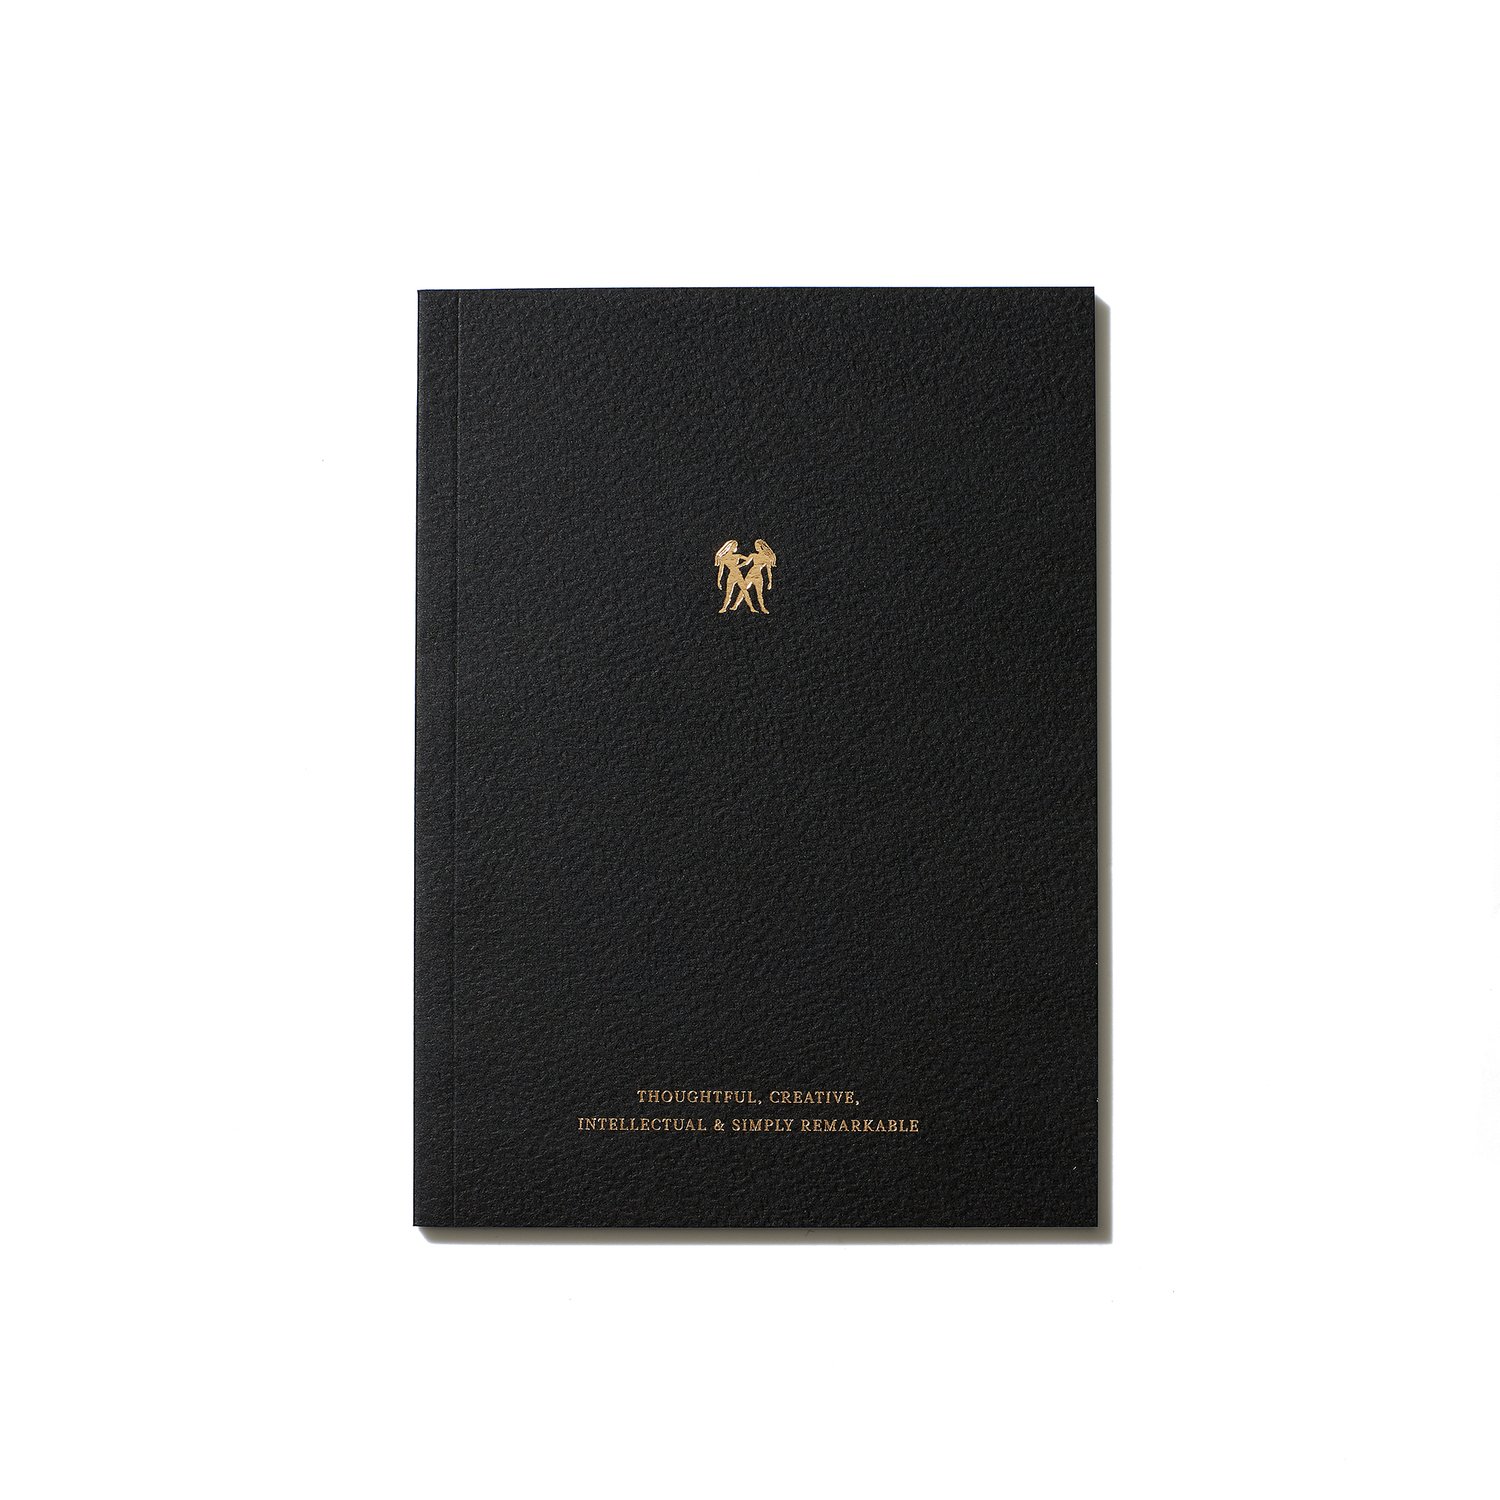 An Organised Life gemini notebook, $16